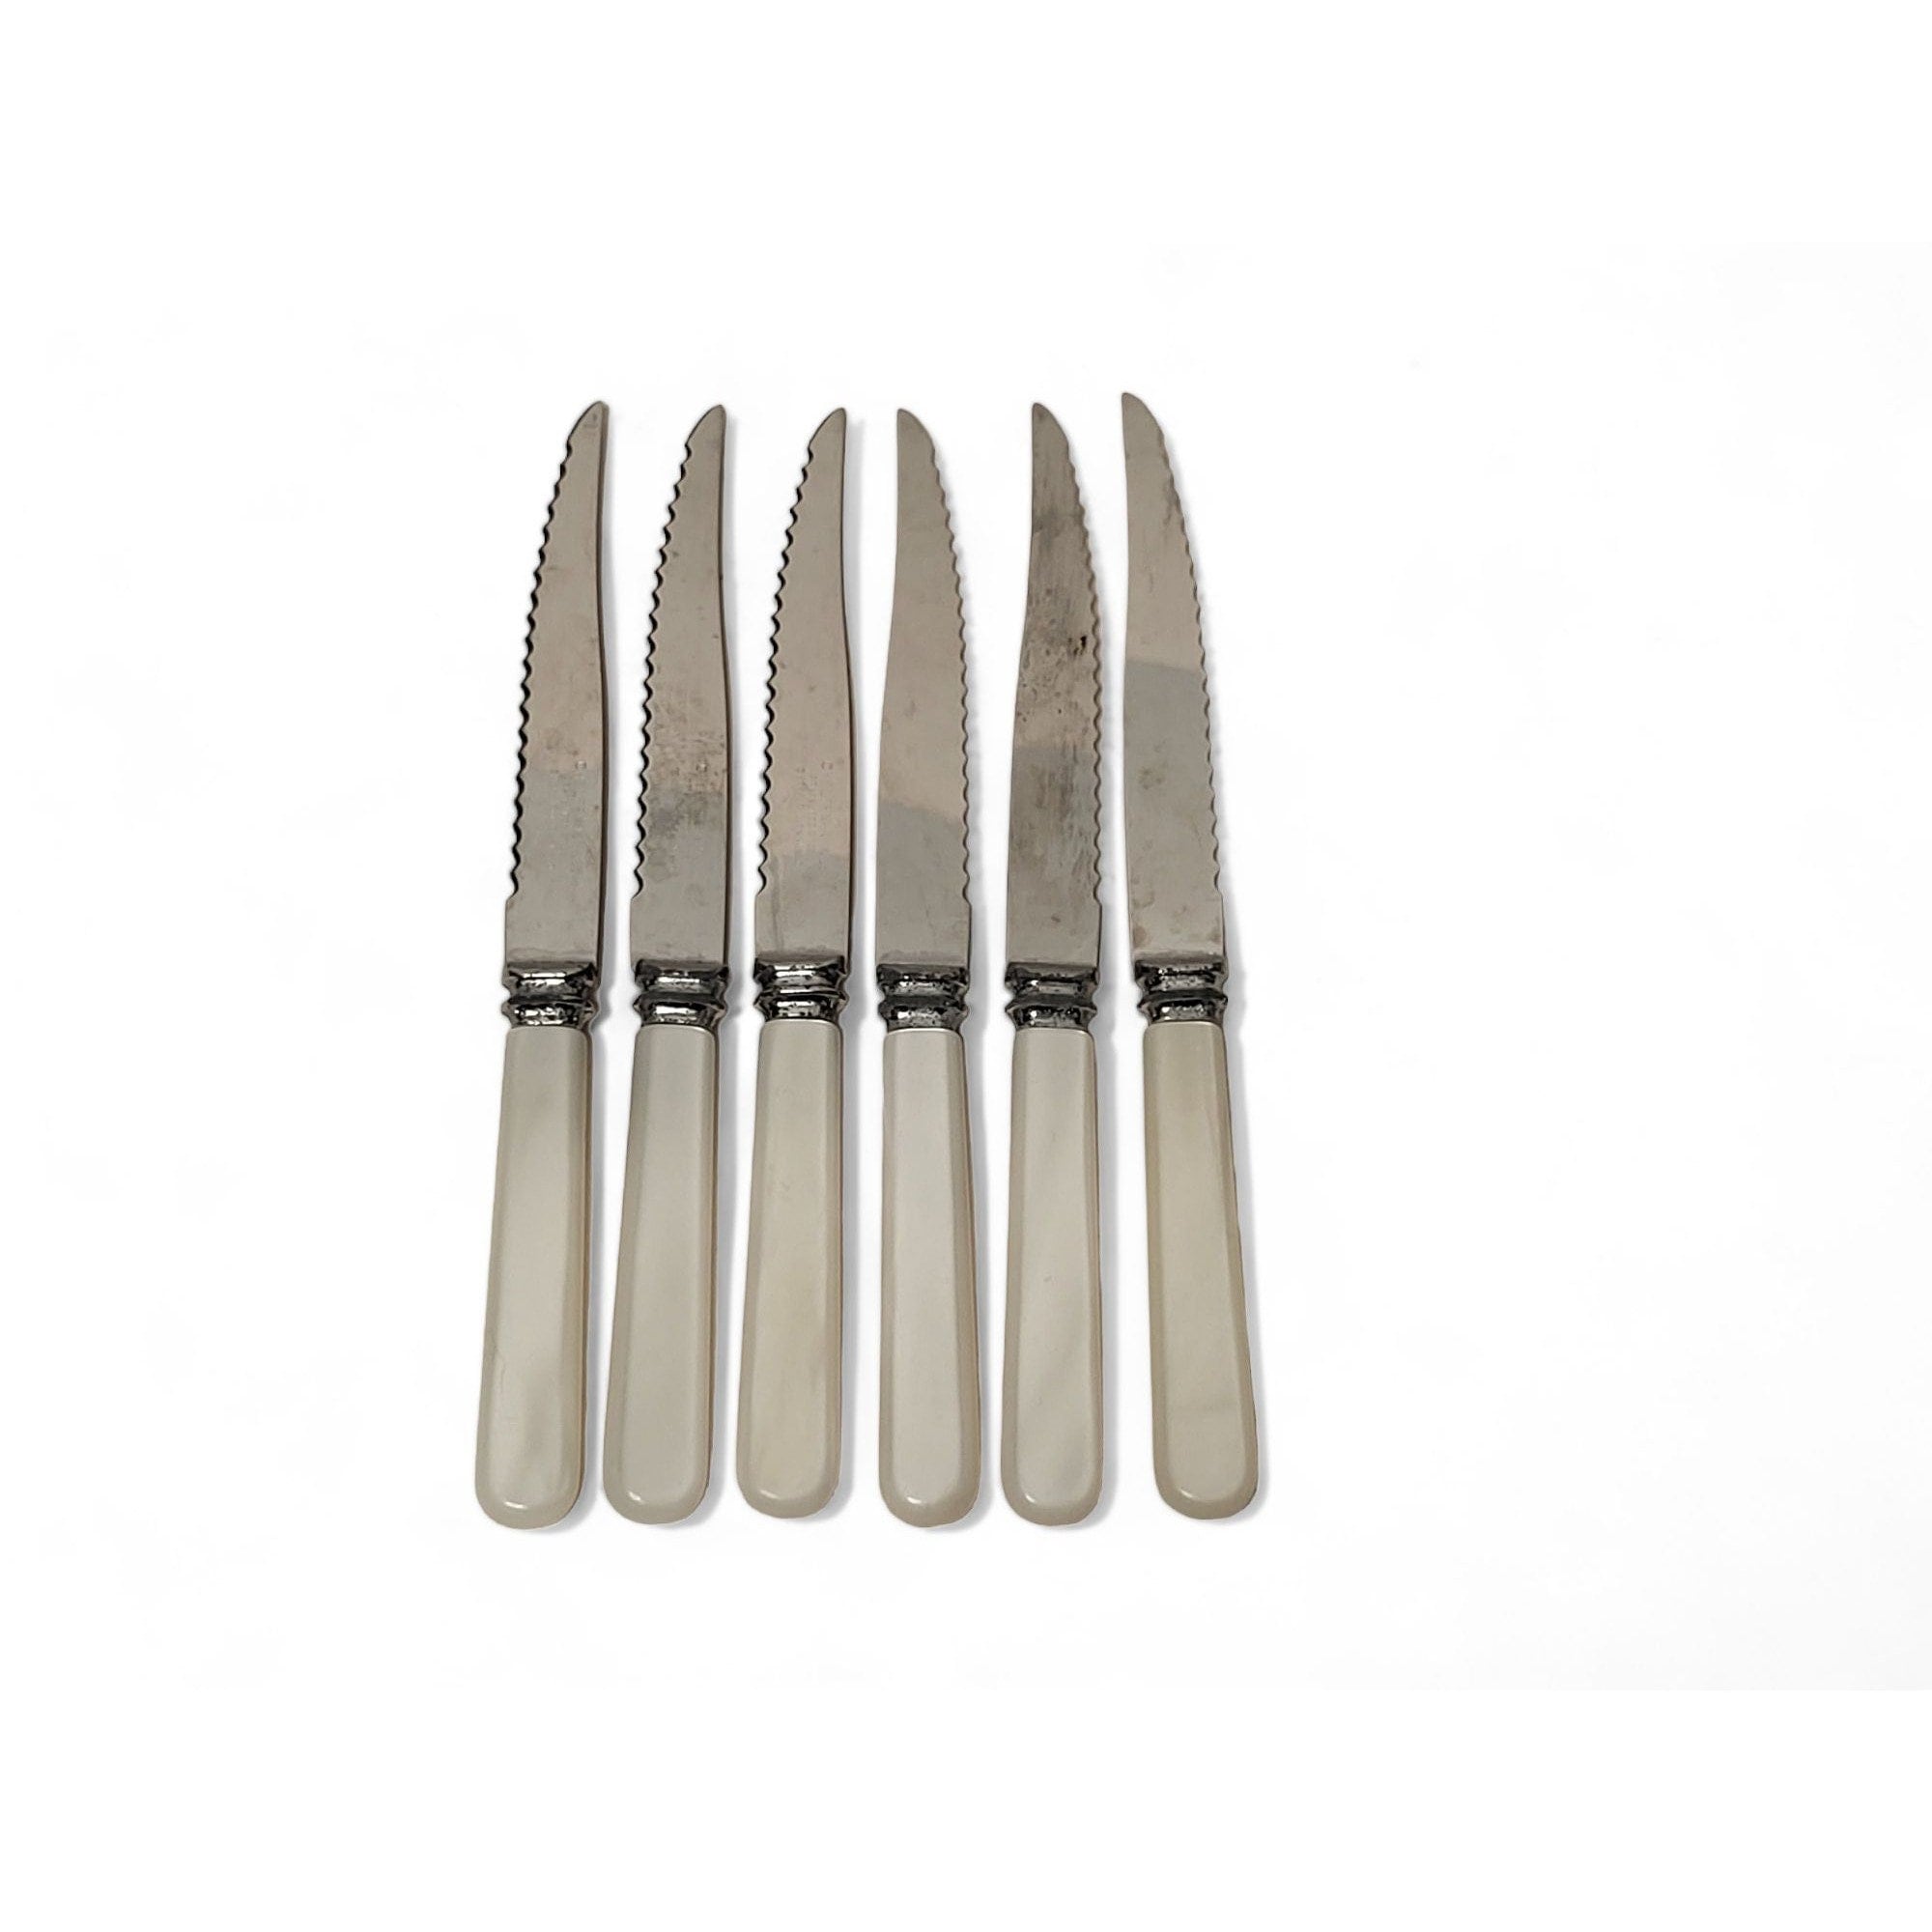 MICHELANGELO Kitchen Knife Set 10 Piece, High Carbon Stainless